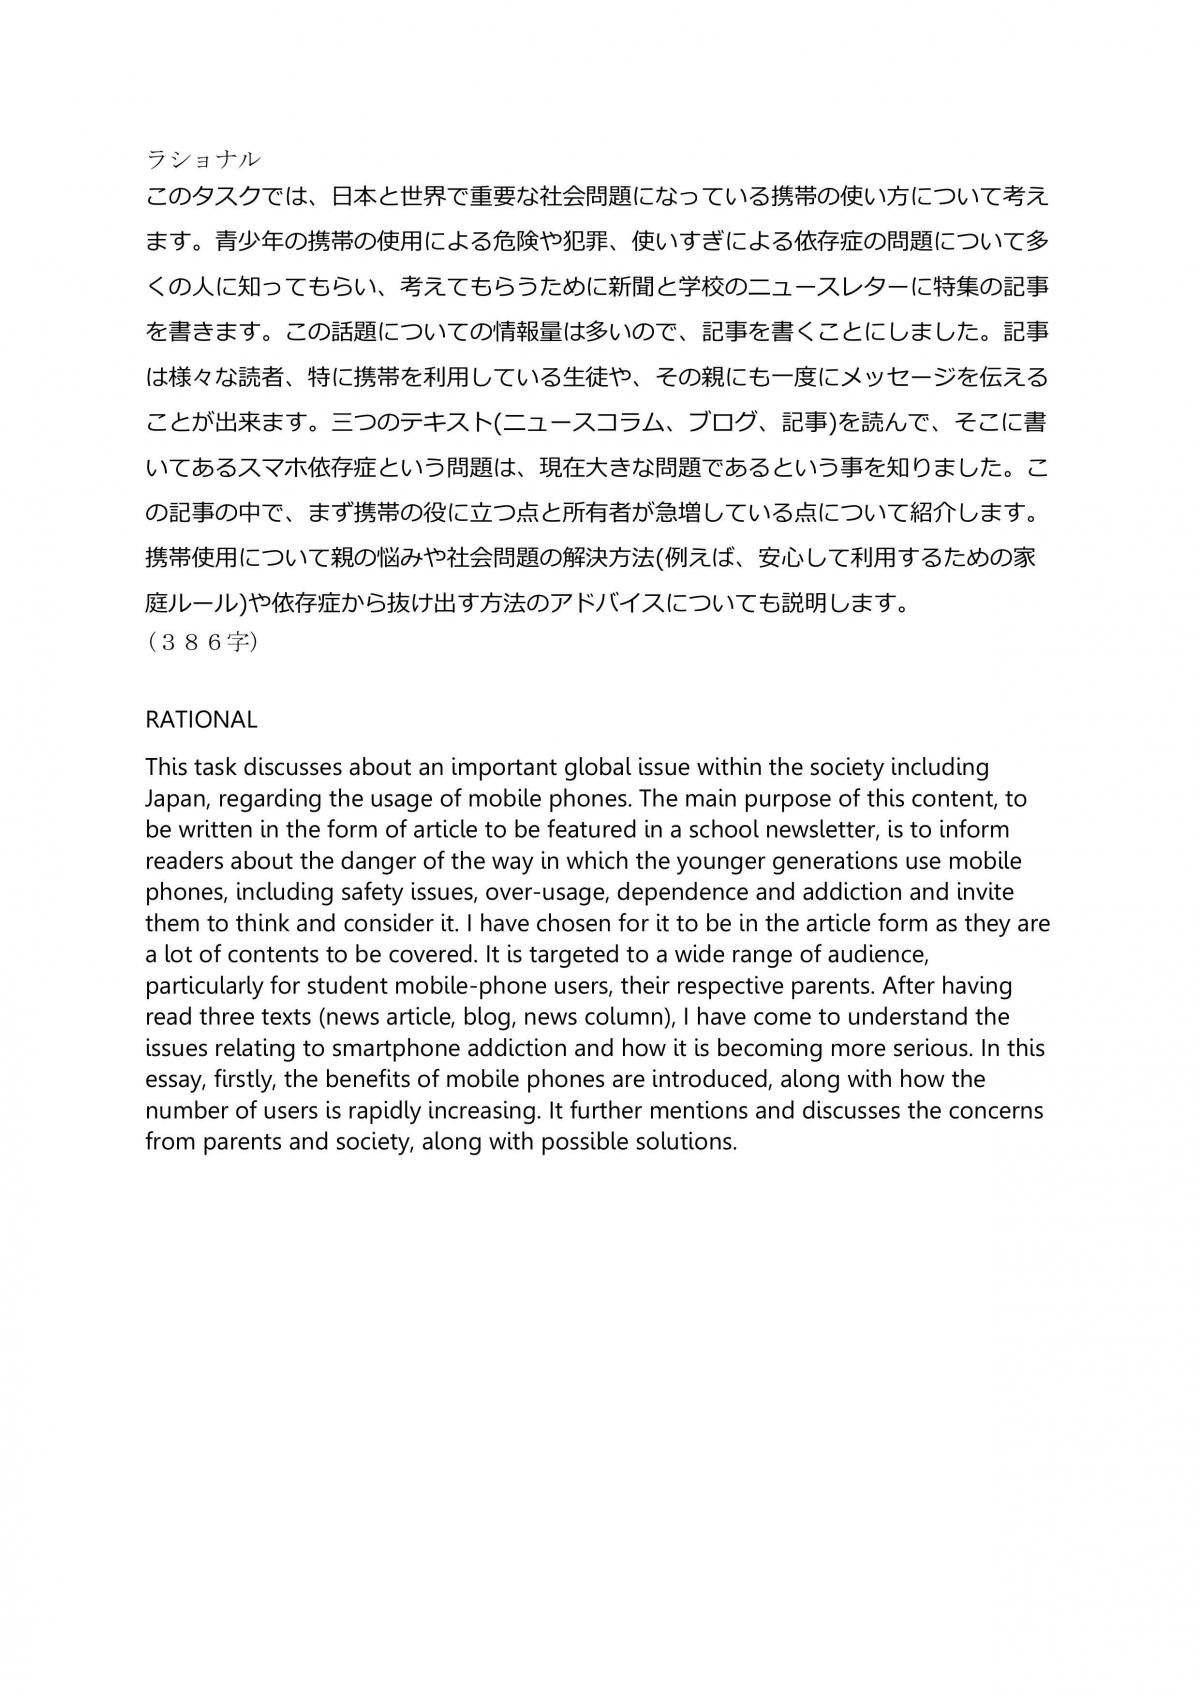 japan essay grade 10 english